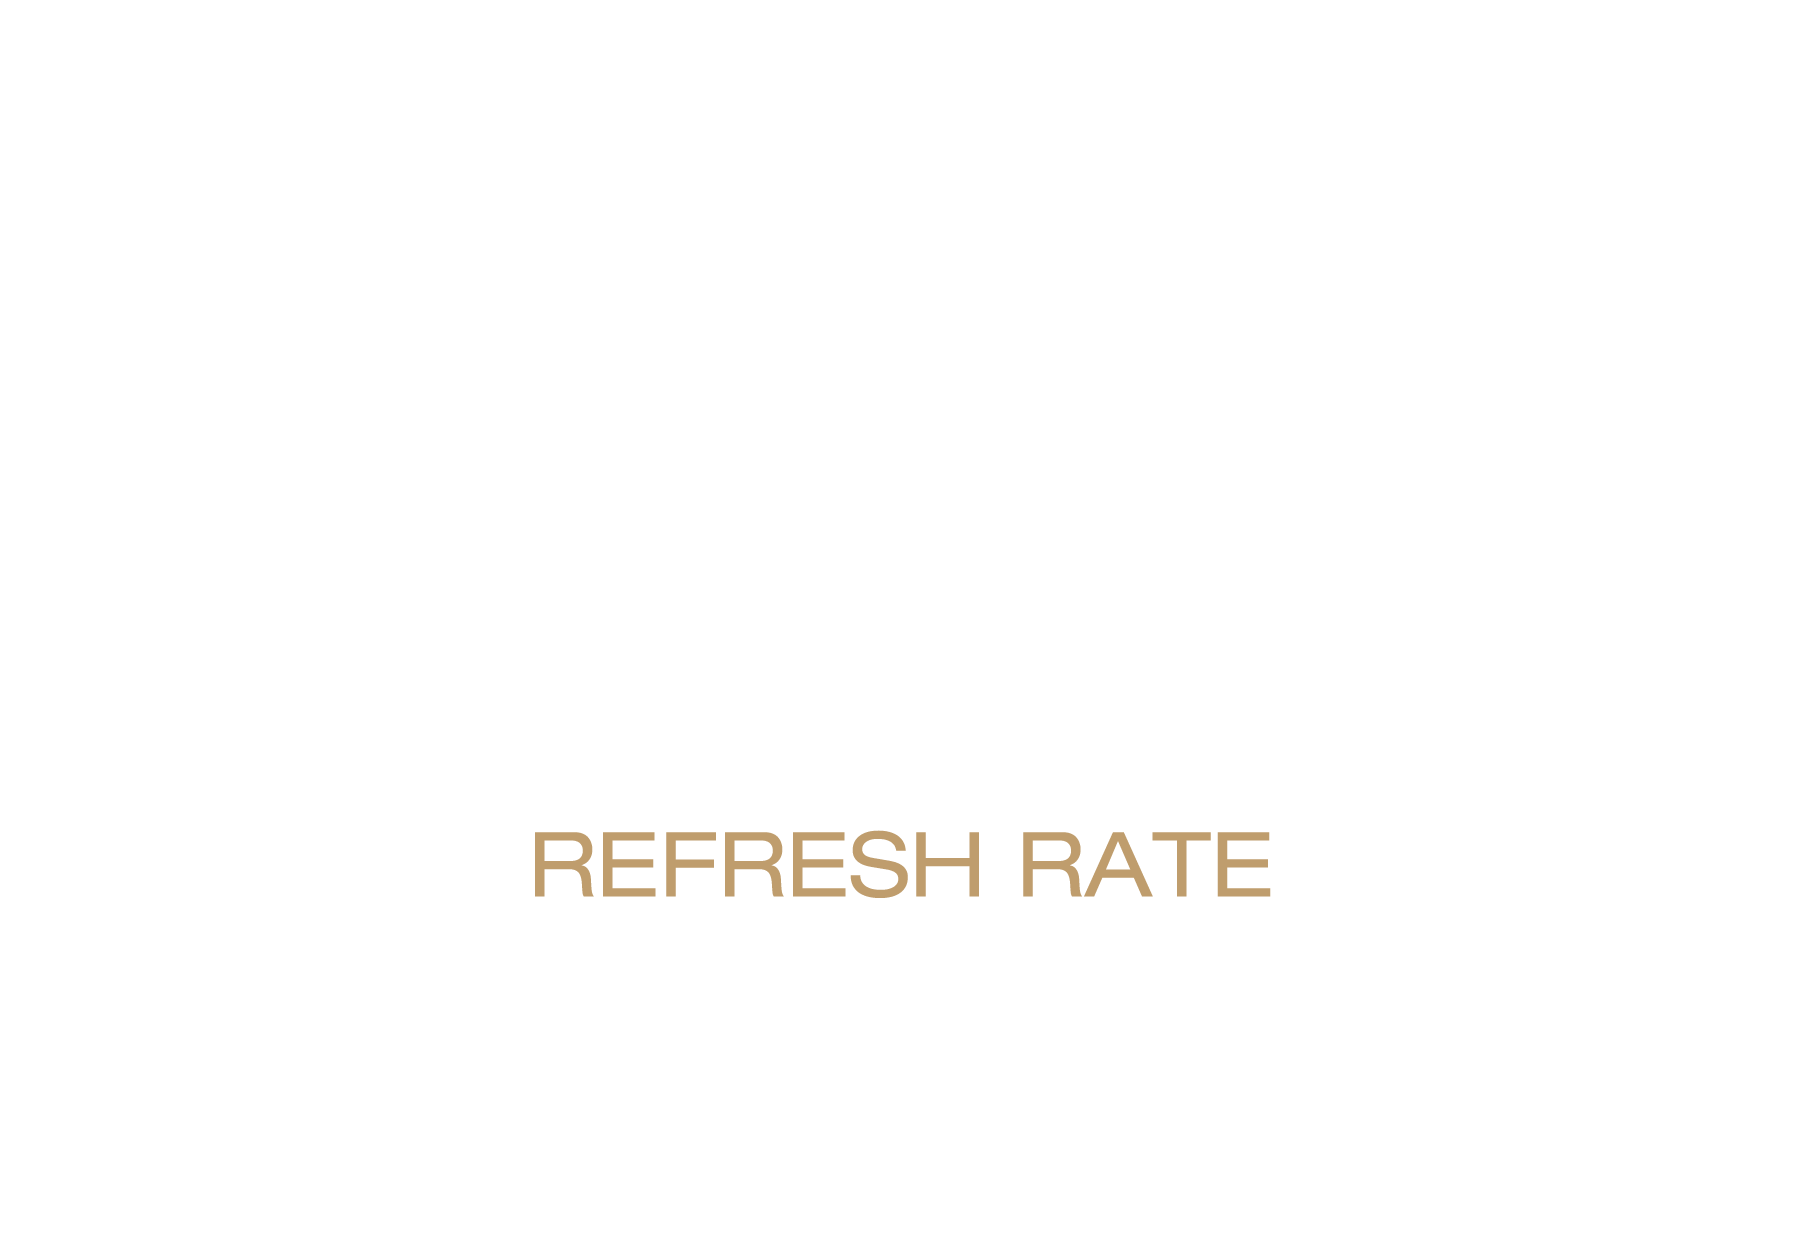 Native 120 HZ Refresh Rate